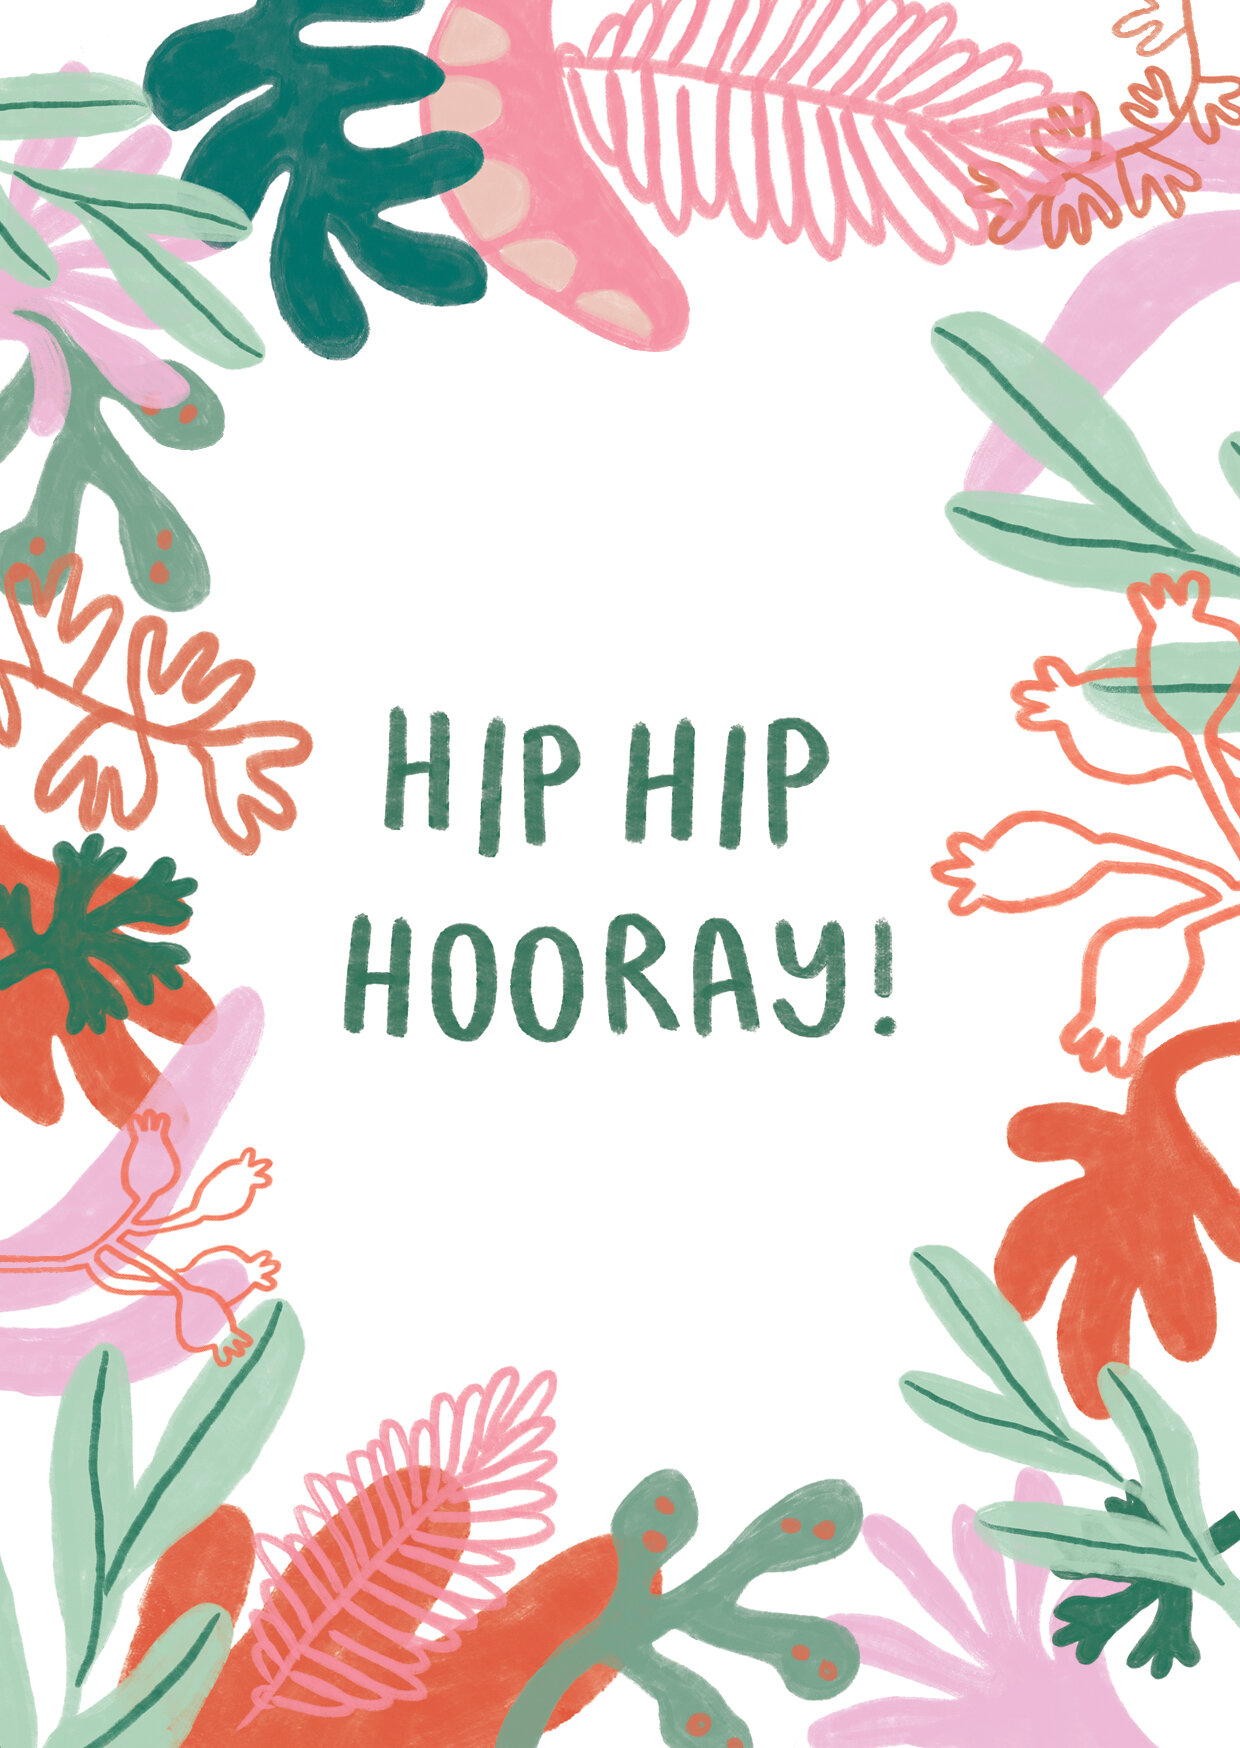 Hip hip hooray- greeting card — Hayle and Shine